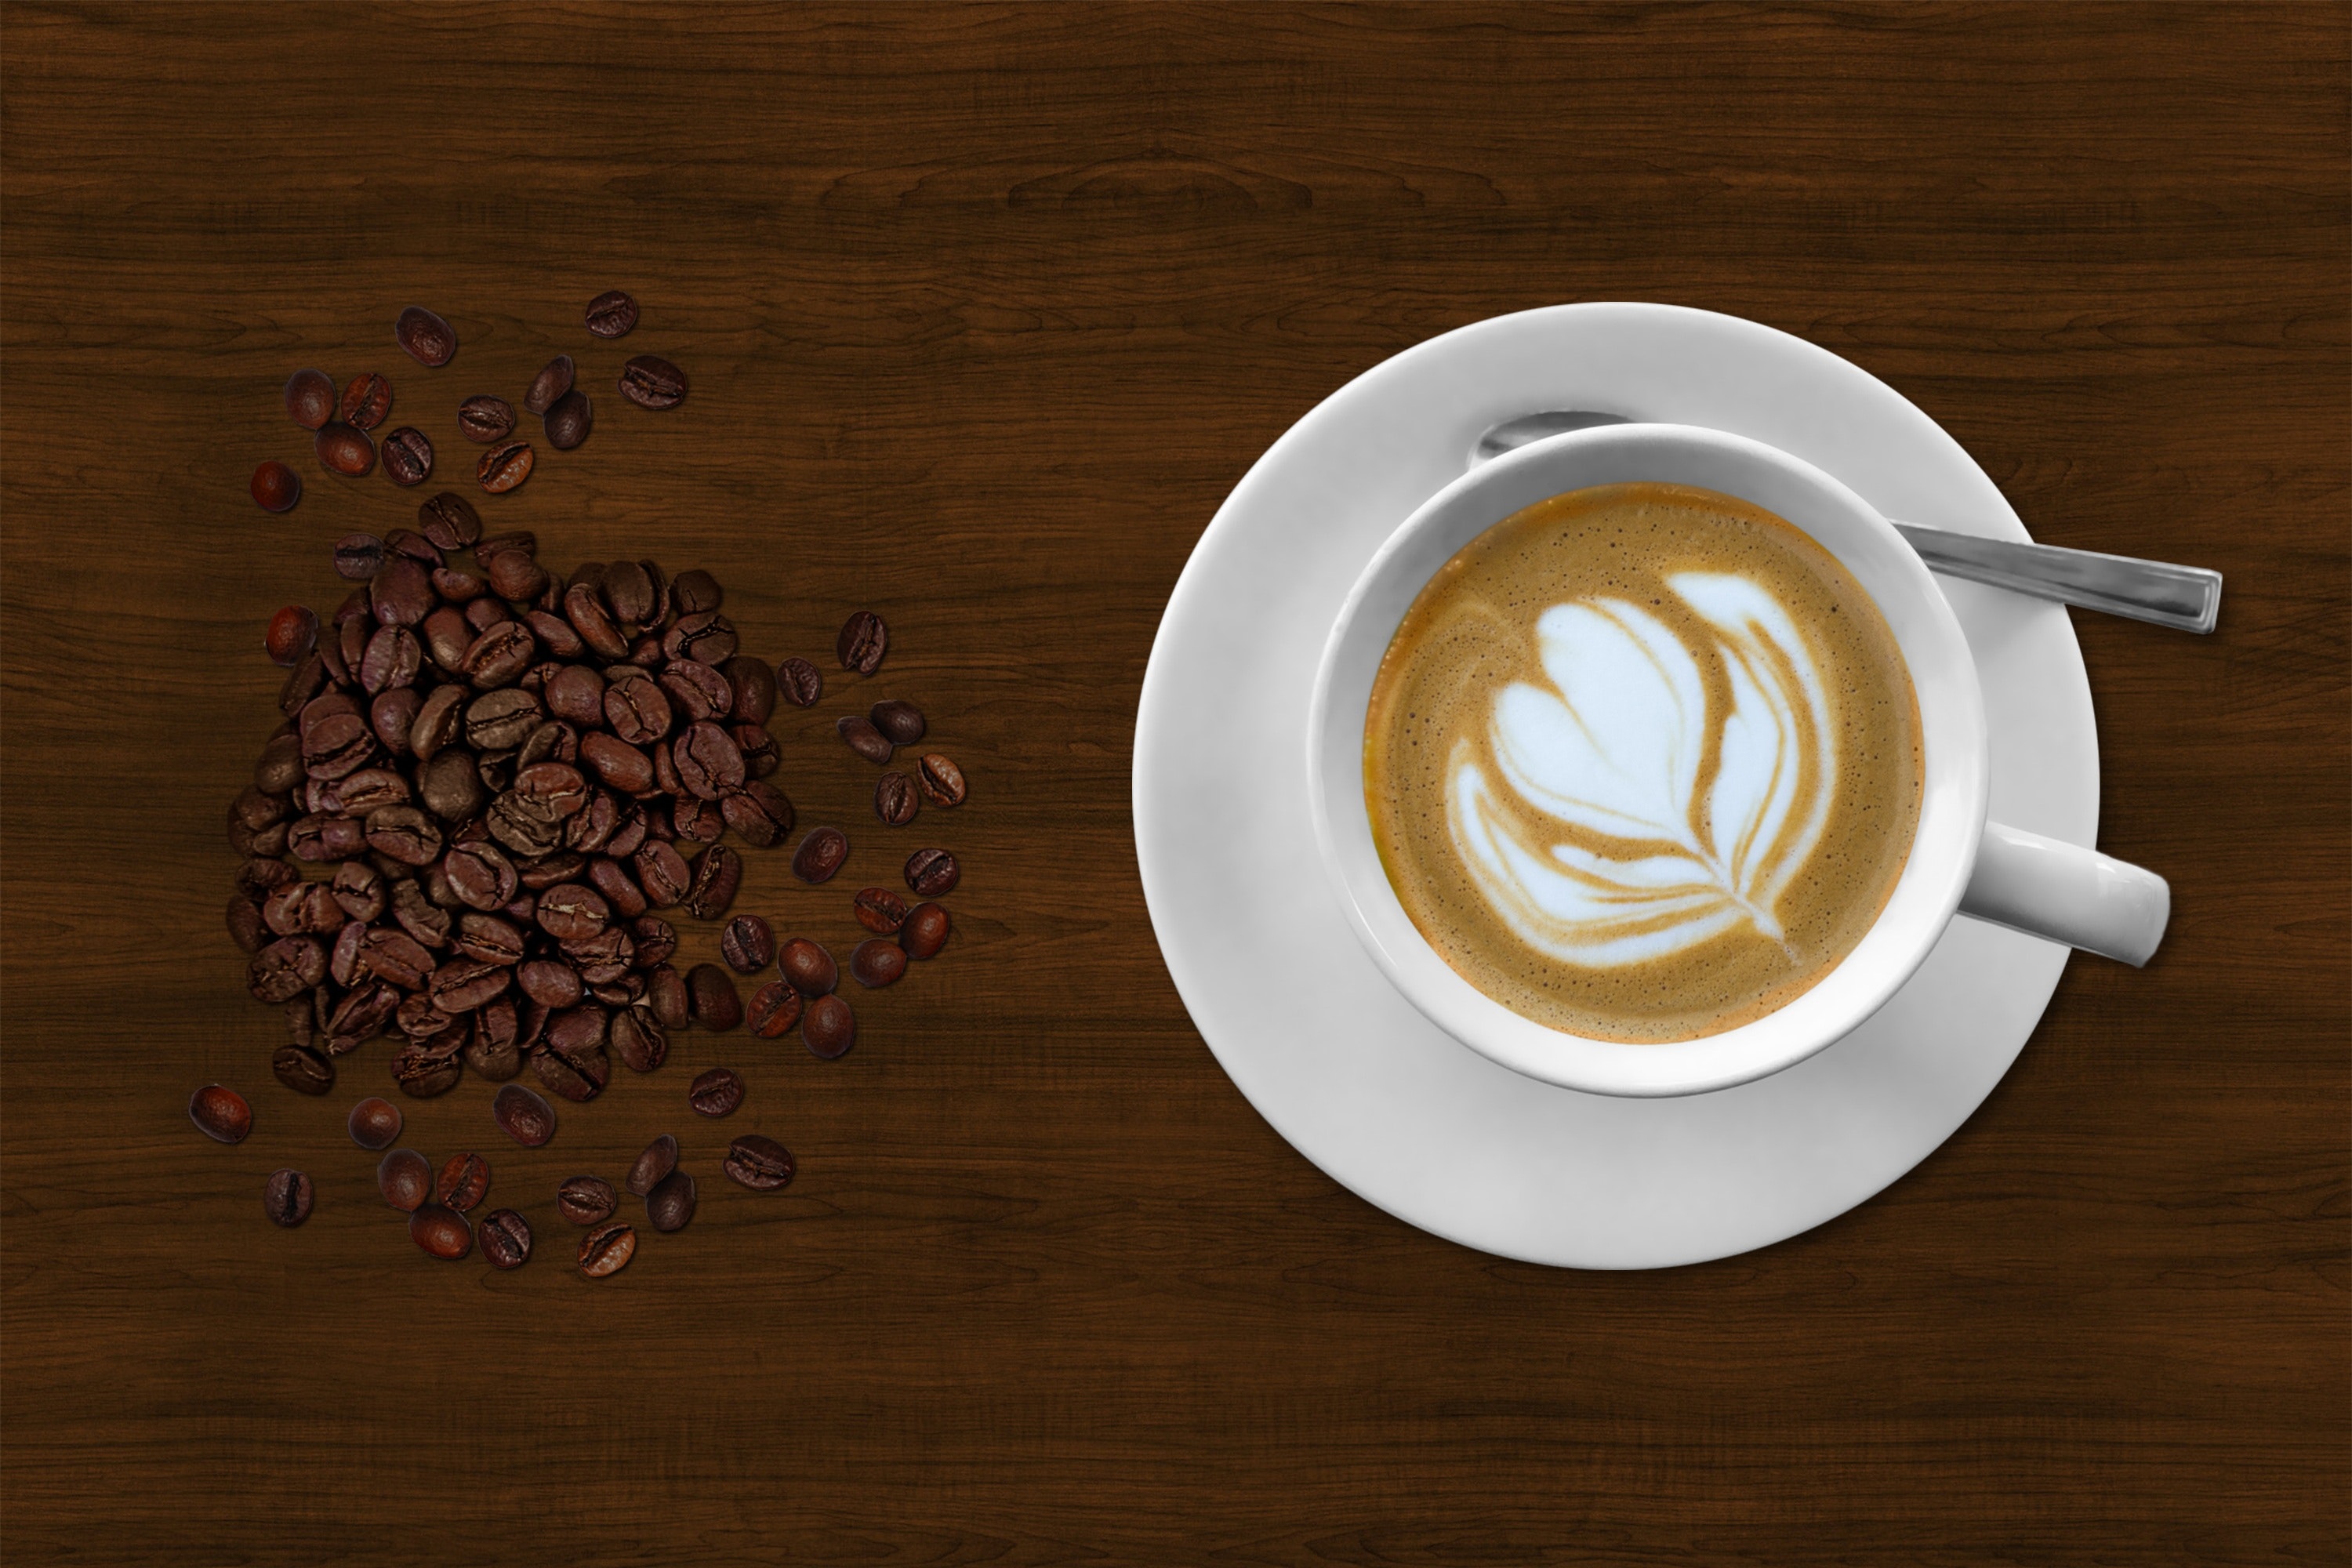 Brown and White Espresso in White Coffee Mug Beside Coffee Beans, Bean, Food, Wood, Teaspoon, HQ Photo